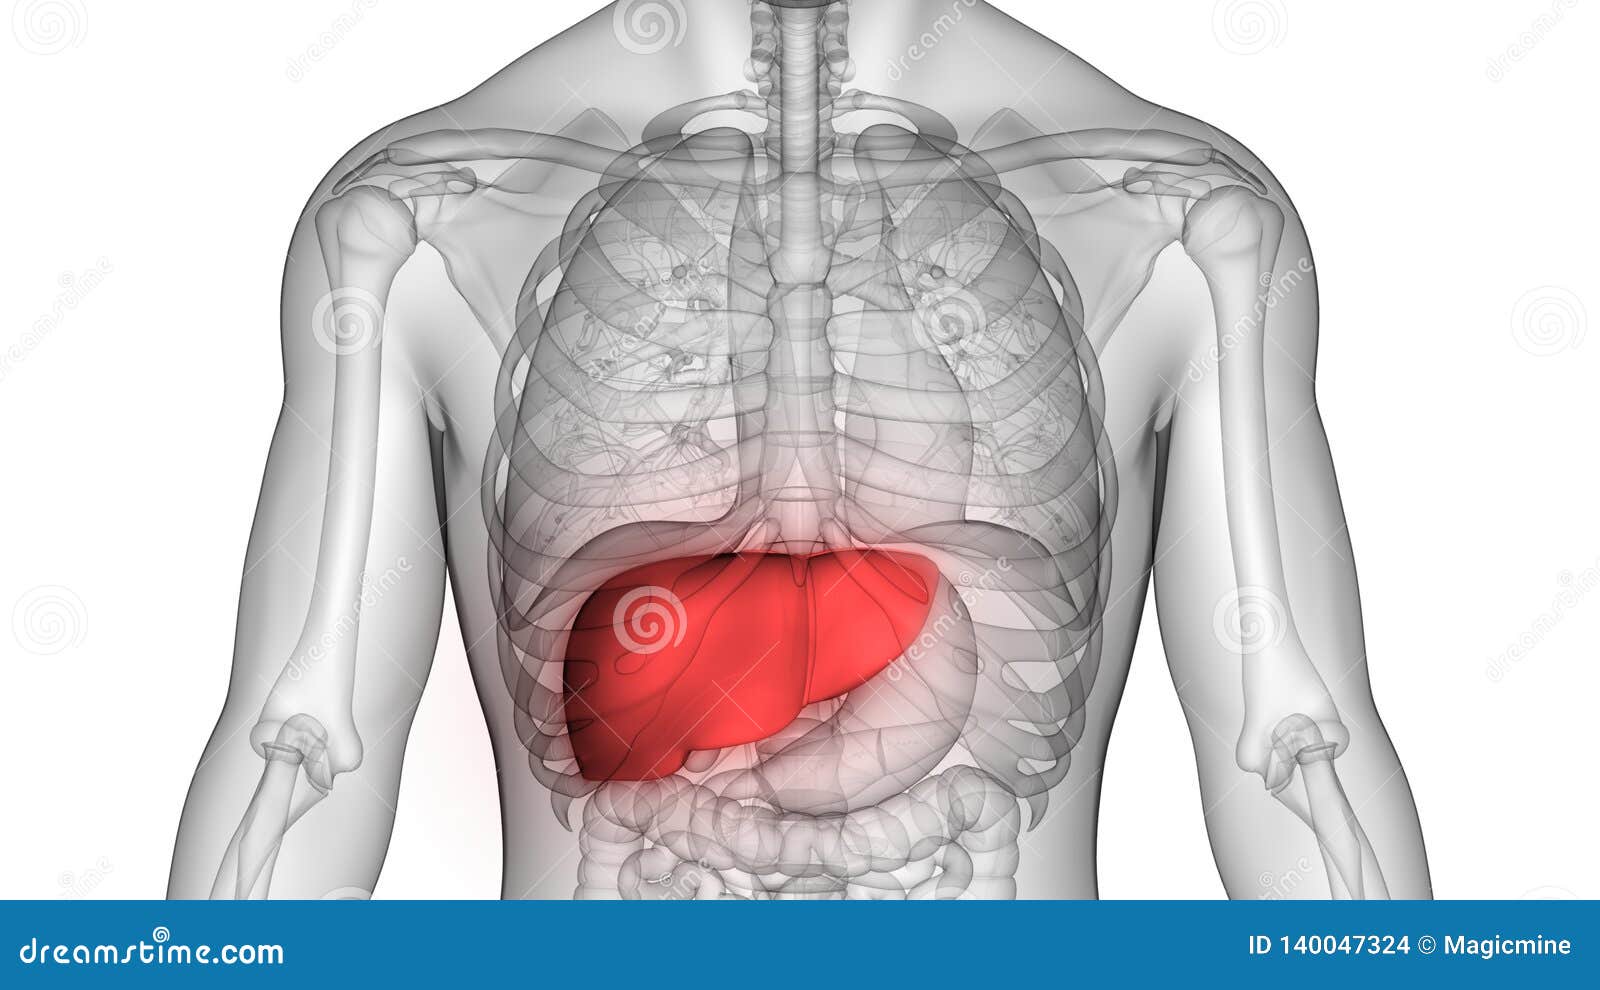 Human Body Organs Digestive System Liver Anatomy Stock Illustration Illustration Of Medical Acids 140047324